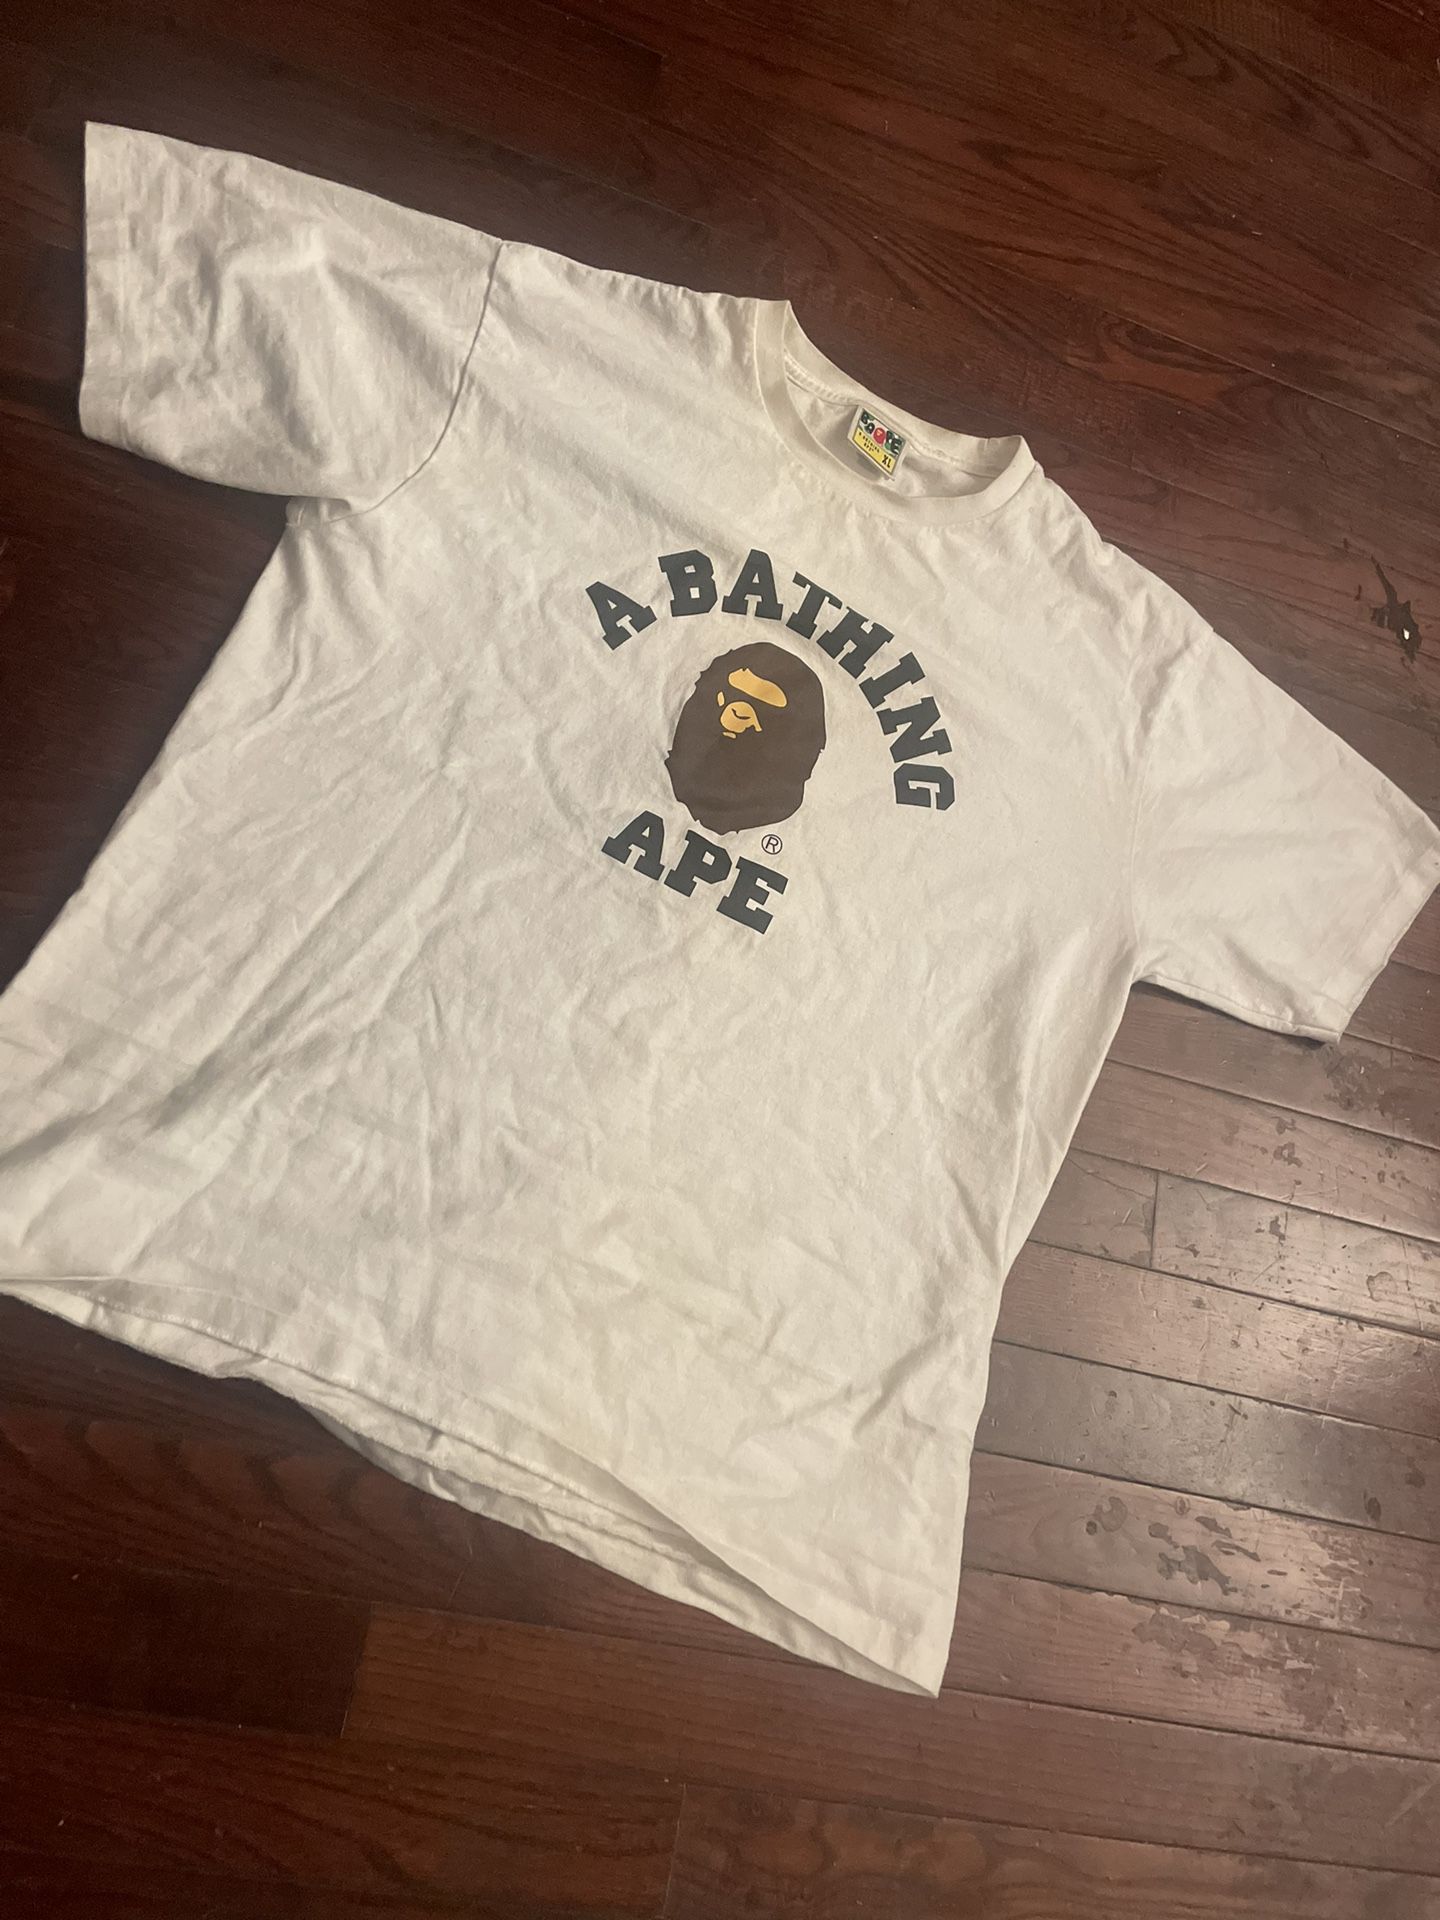 Bape Shirt: Size Xl